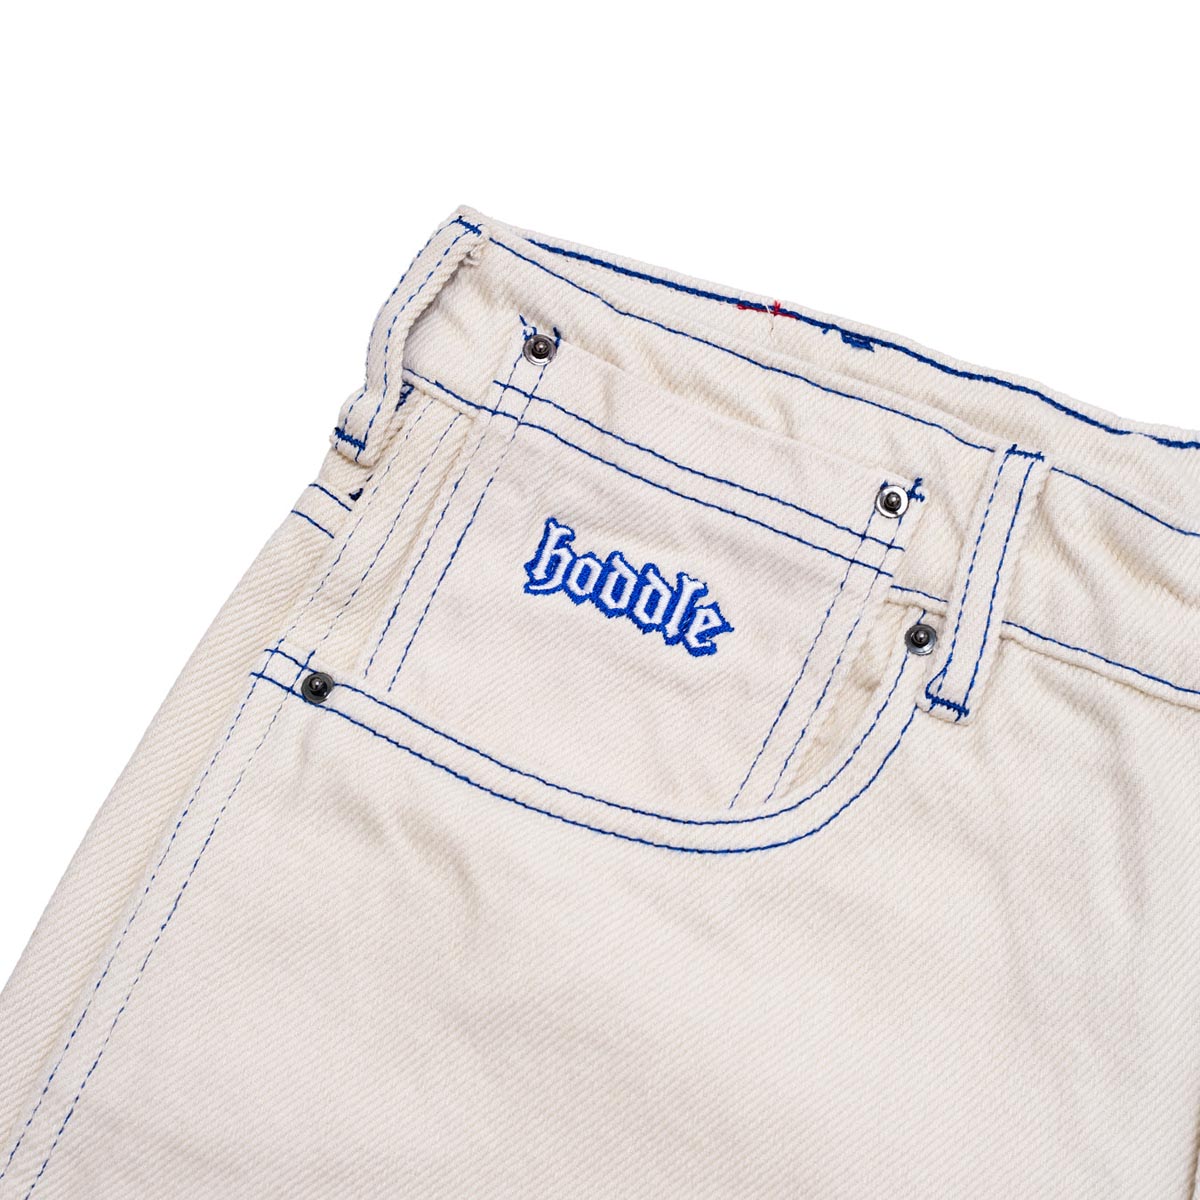 Hoddle 16o Denim Ranger Jeans - White/Blue Stich image 4